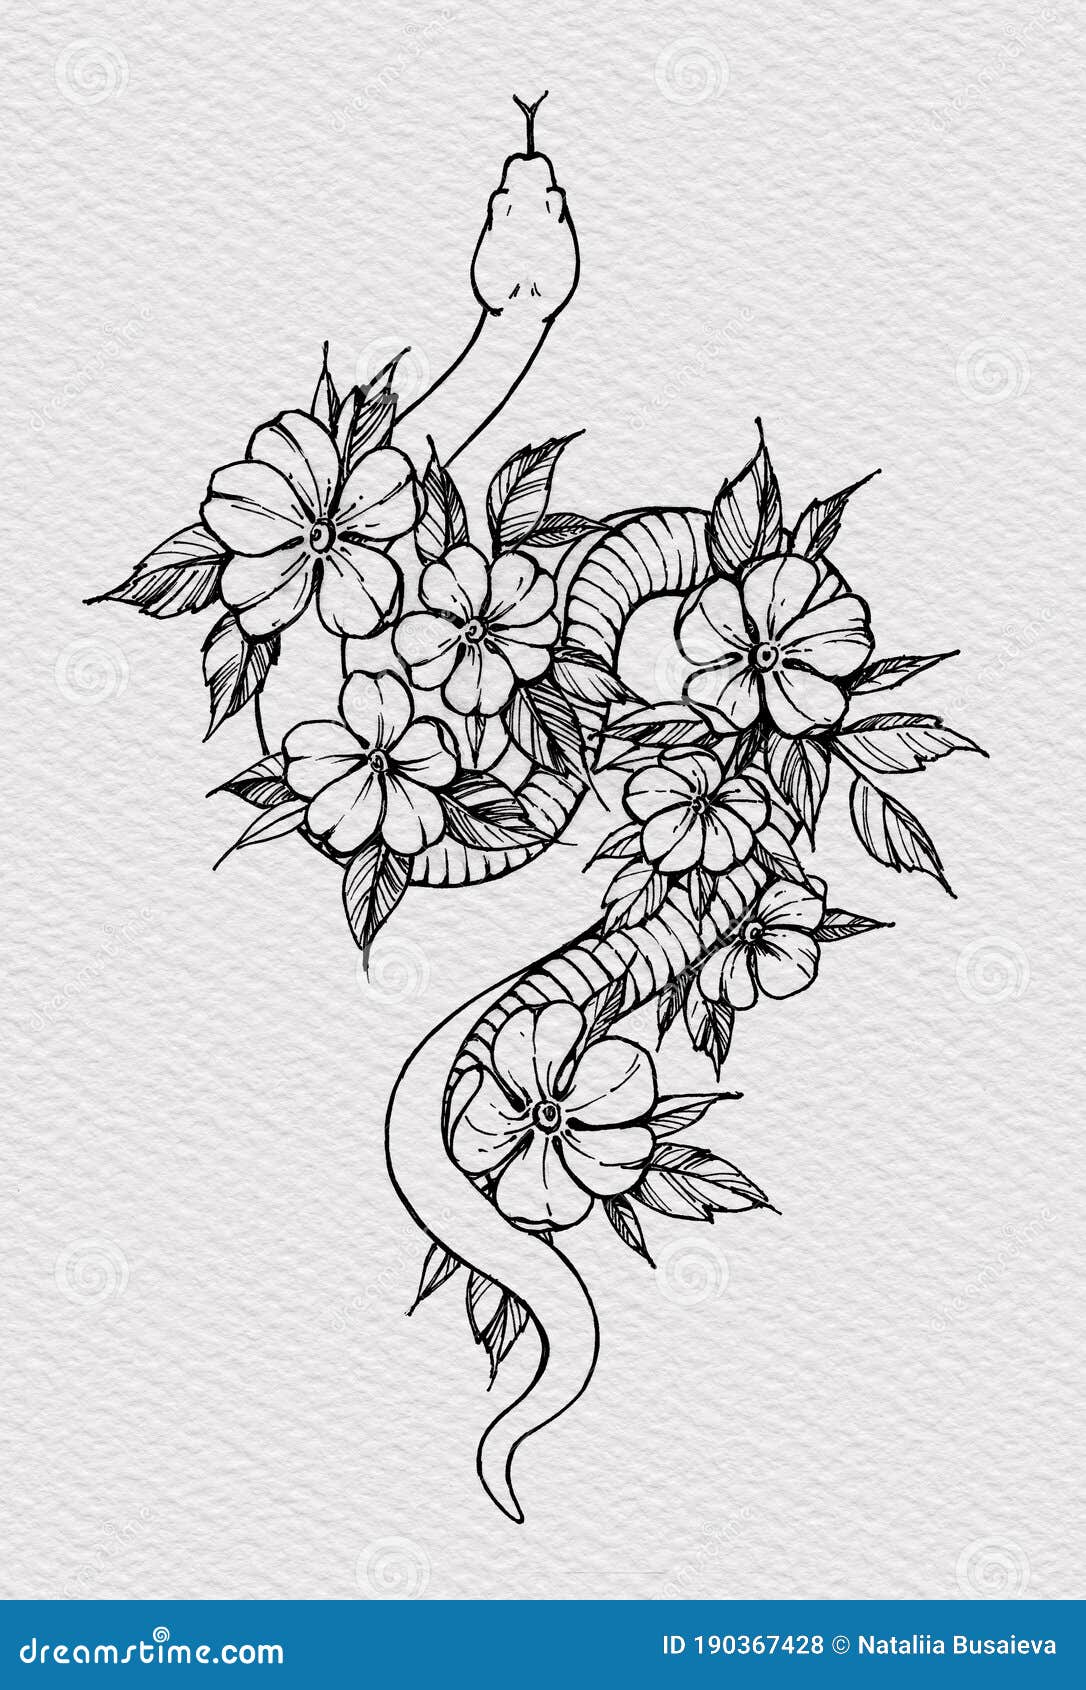 Tattoo snake on Pinterest